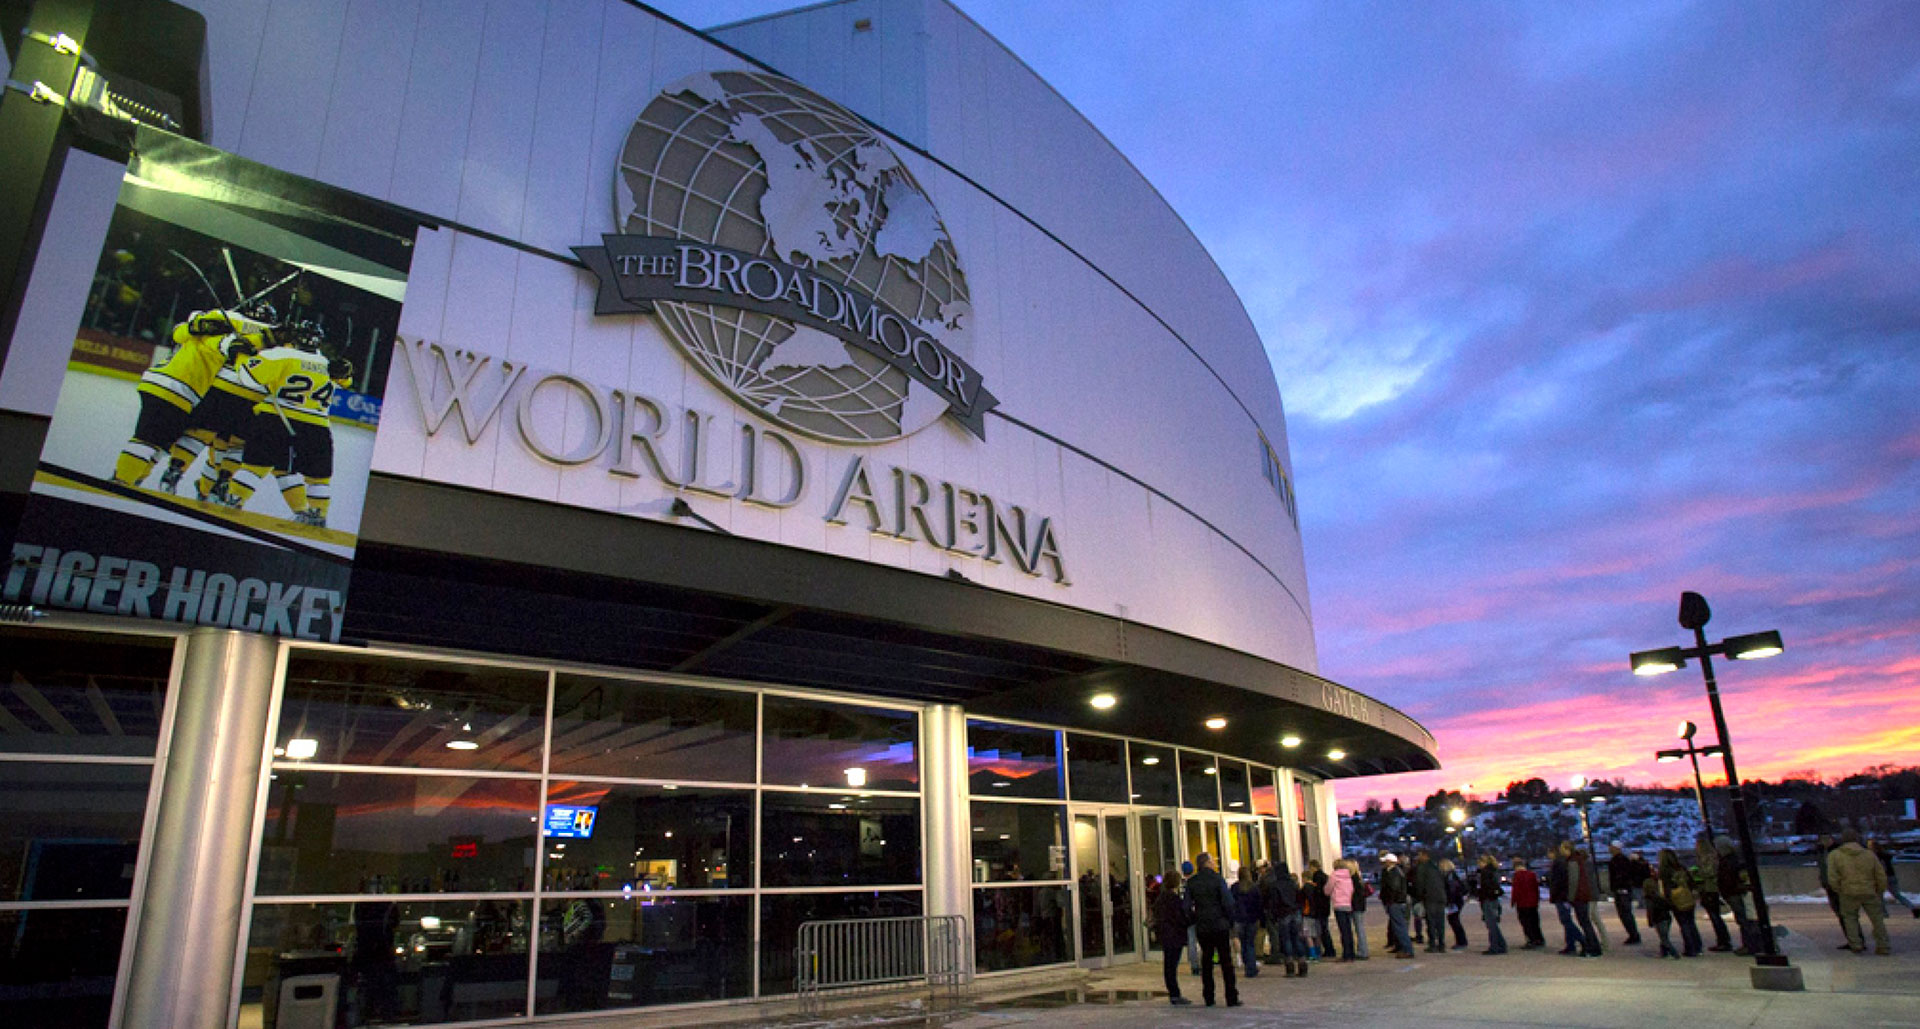 Мировая арена стран. Broadmoor World Arena. World Arena Colorado Springs. Resorts World Arena. Broadmoor World Arena 1998.